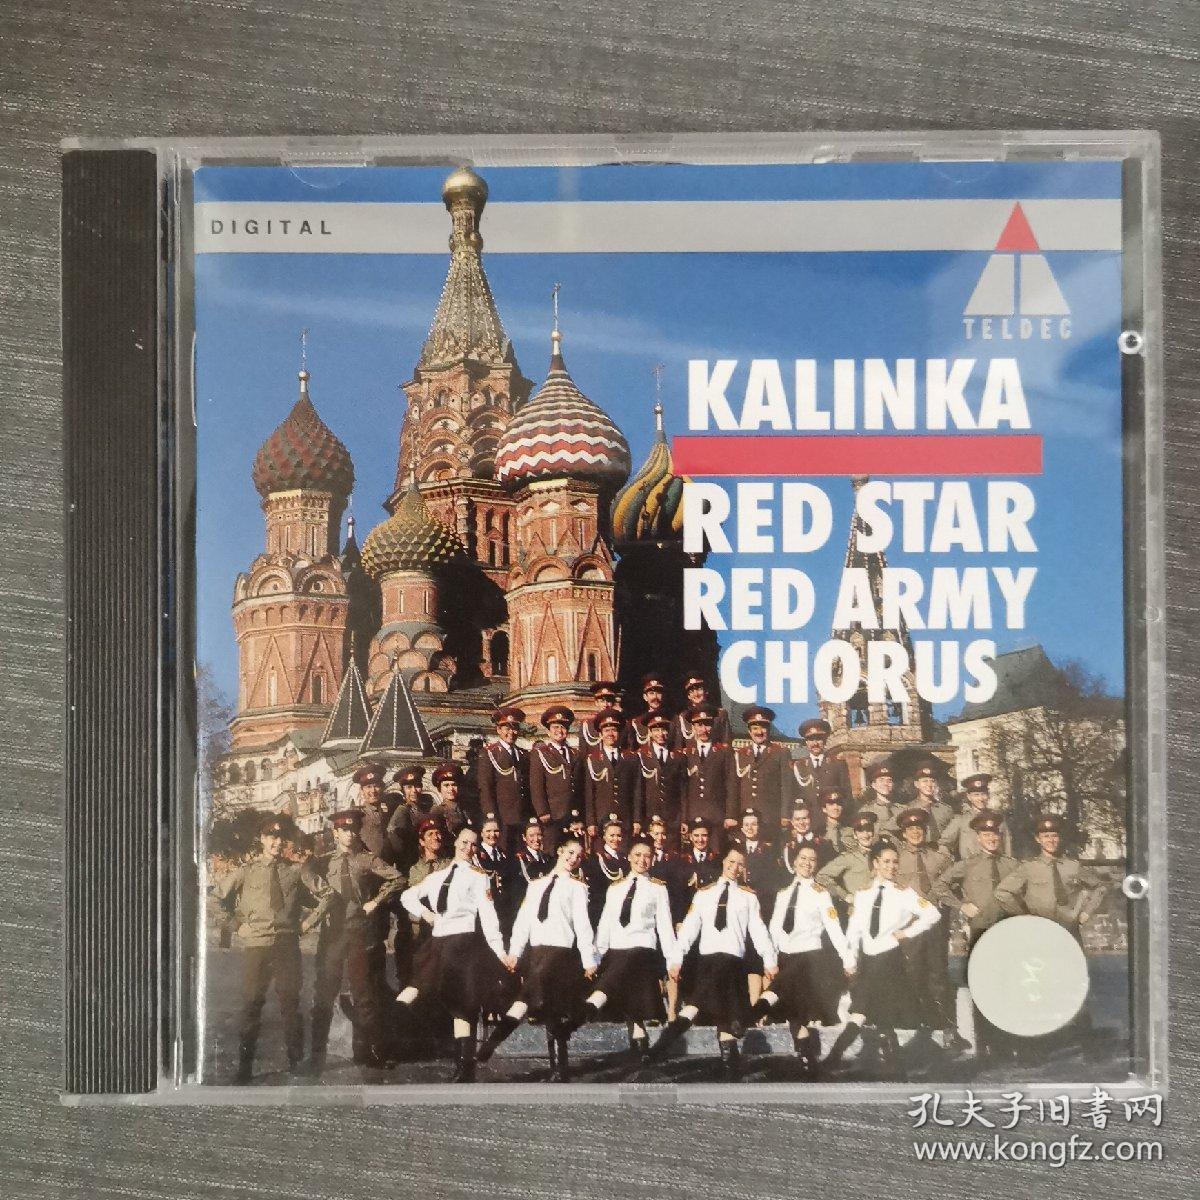 46光盘CD ：KALINKA Red Star Red Army Chorus      一张光盘盒装